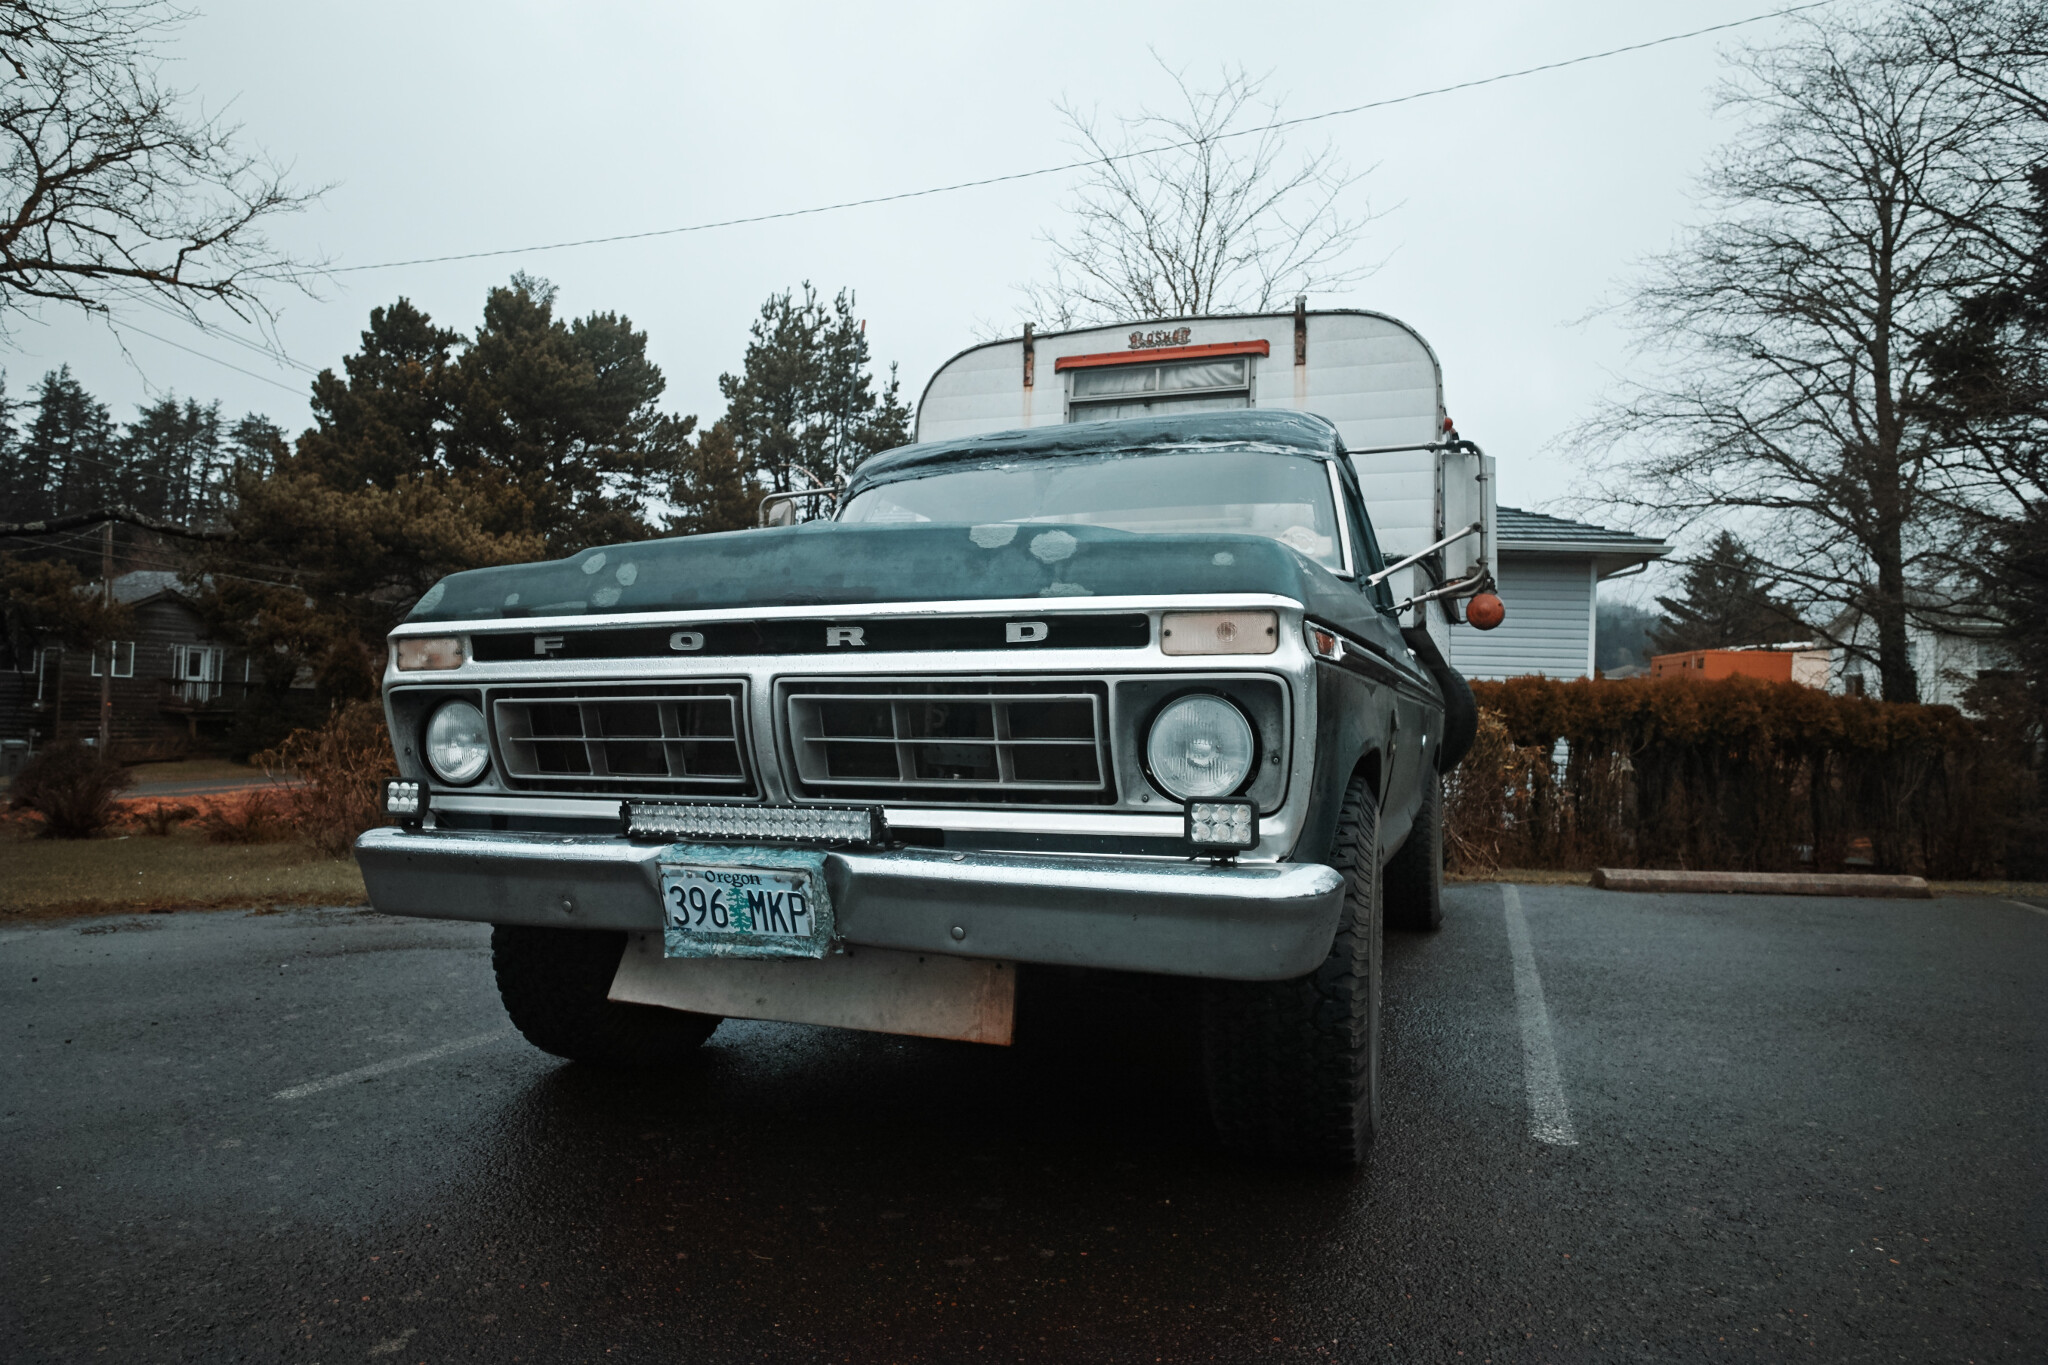 Teal & Orange Fifth Wheel in Oregon